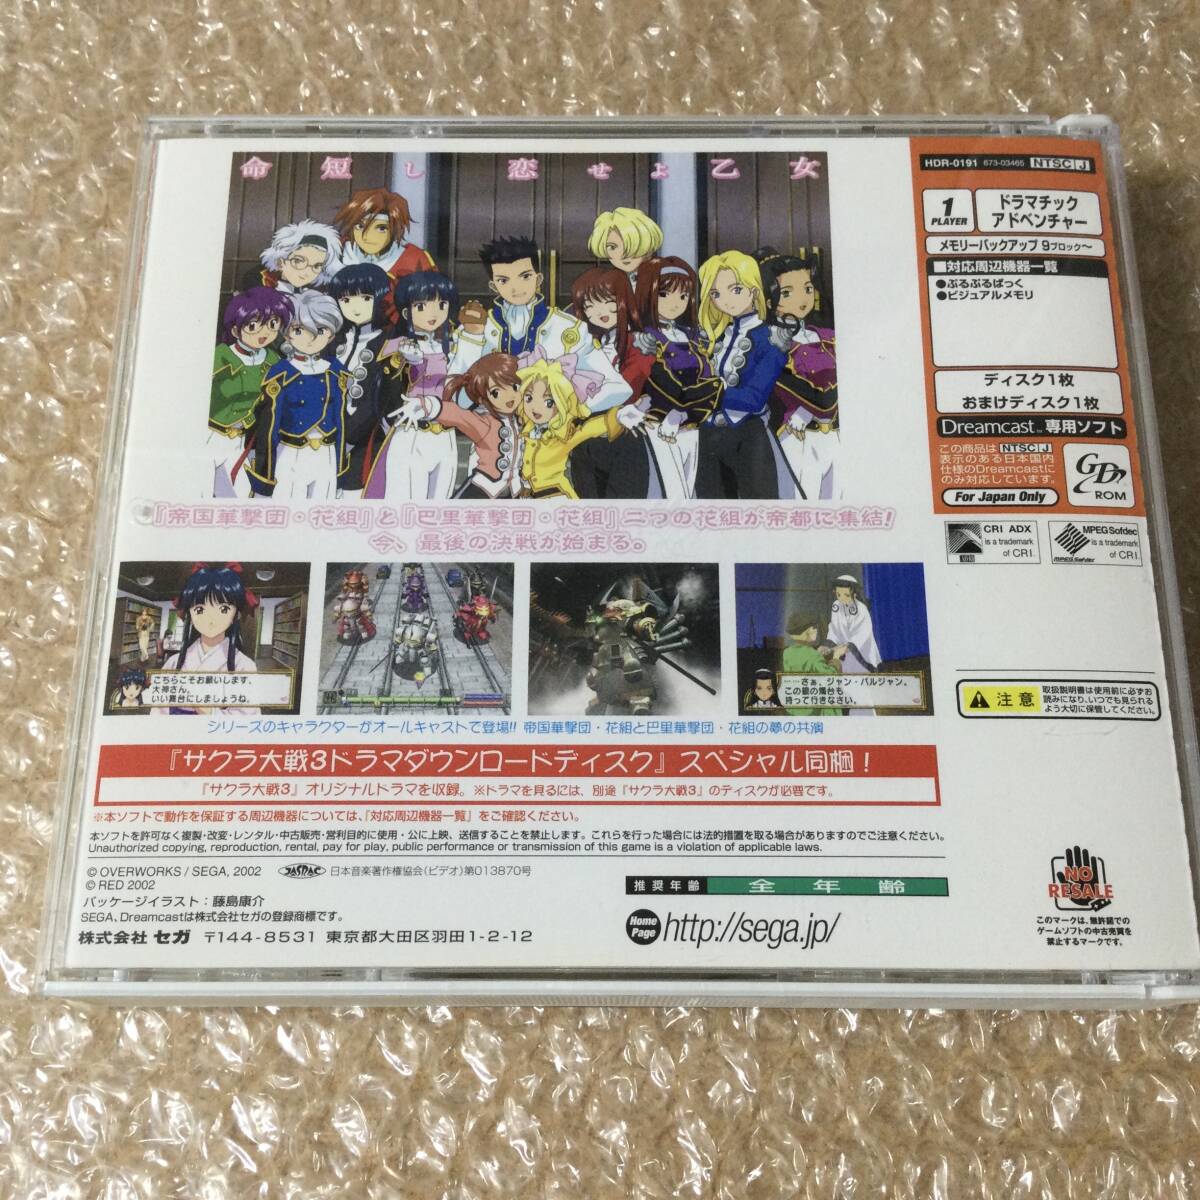 DC Dreamcast Sakura Taisen 4.... woman . country ........[ last. decision war ] Sakura Taisen 3 drama DL disk attaching 2 sheets set postage 215